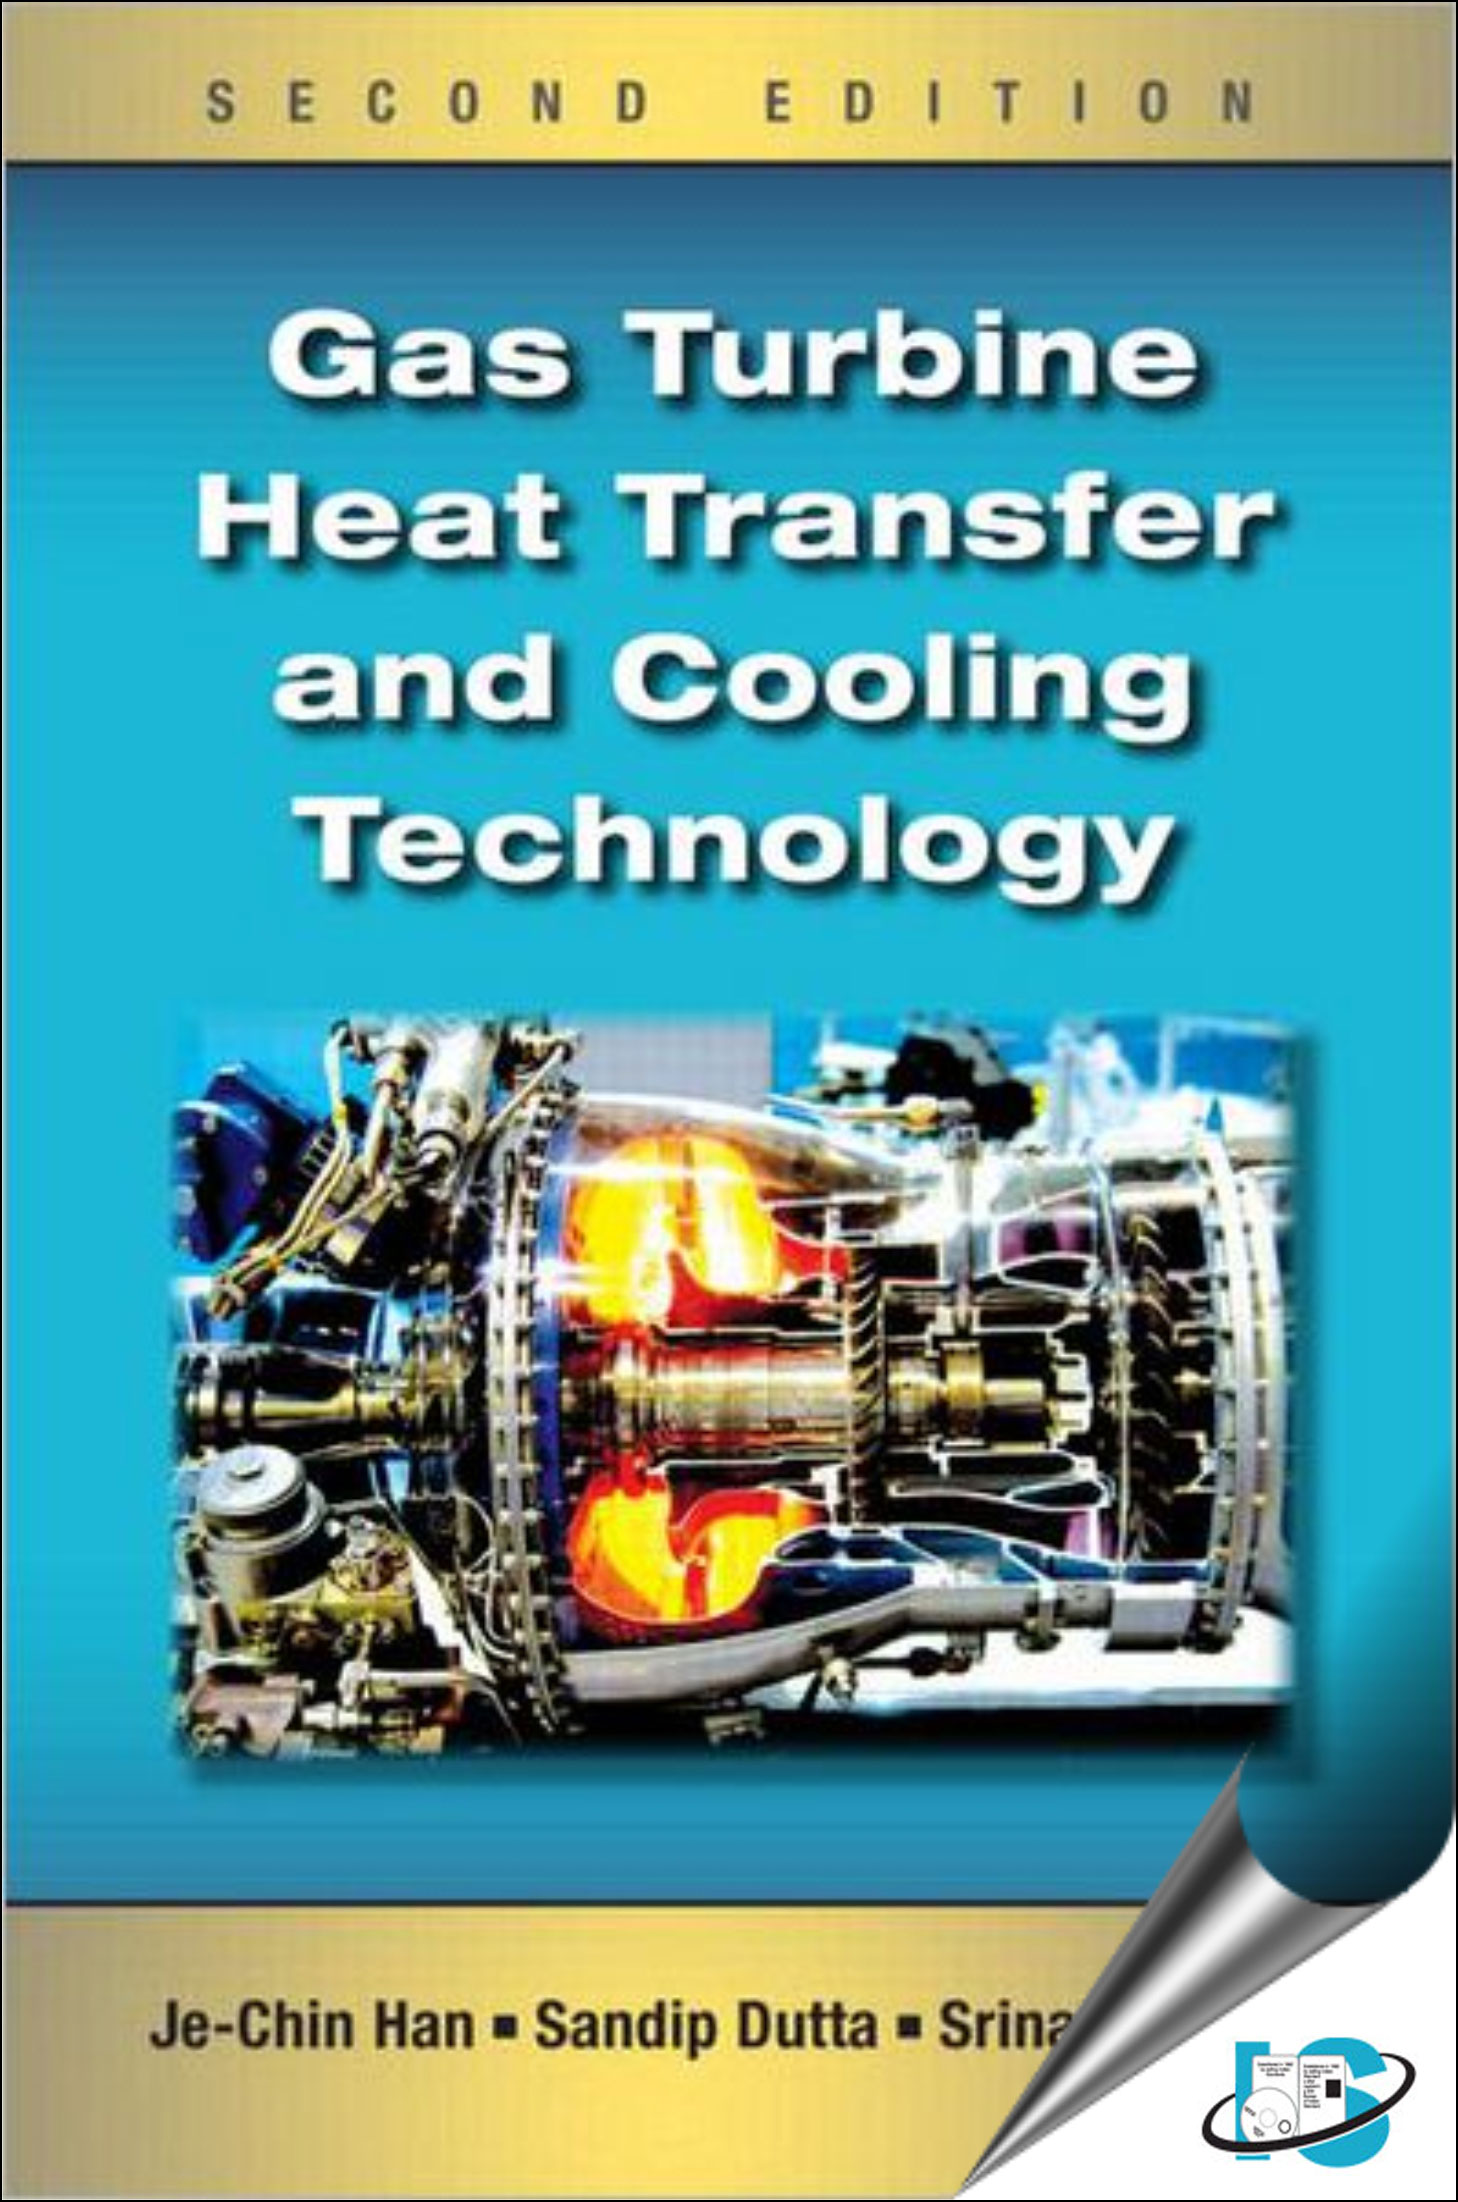 Gas Turbine Heat Transfer and Cooling Technology Je-Chin Han, Sandip Dutta and Srinath Ekkad